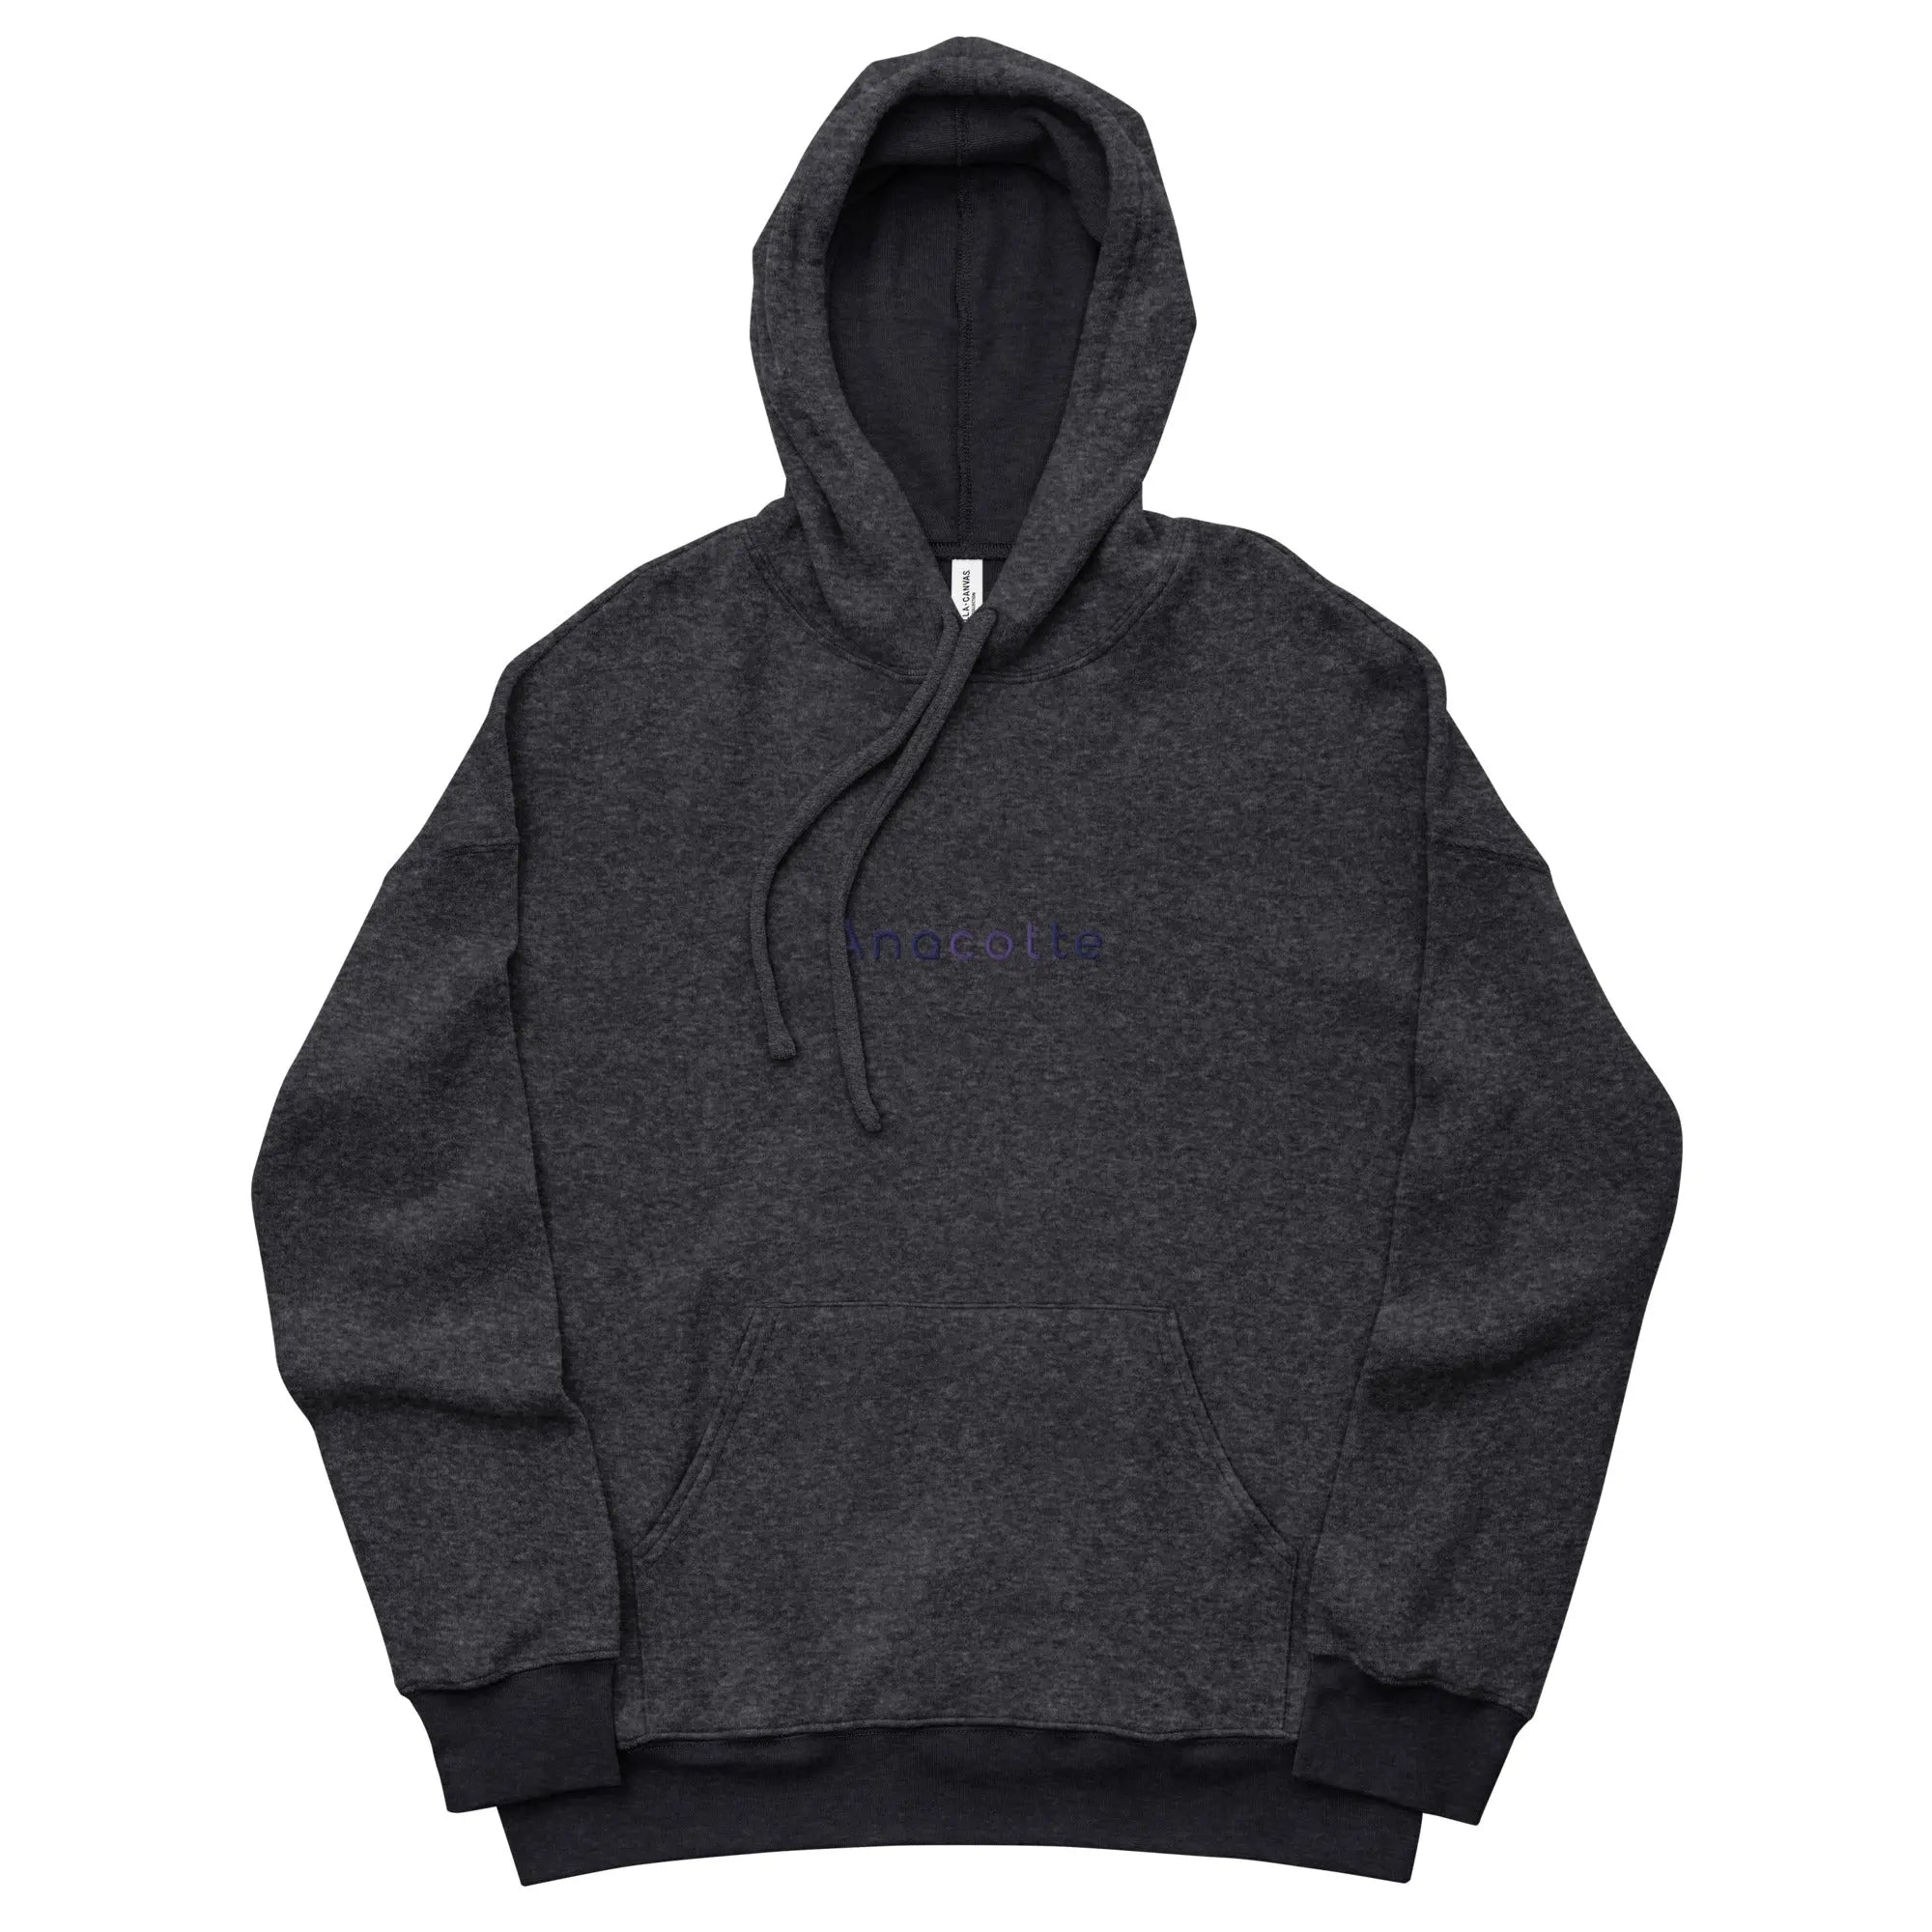 Anacotte Unisex sueded fleece hoodie Anacotte